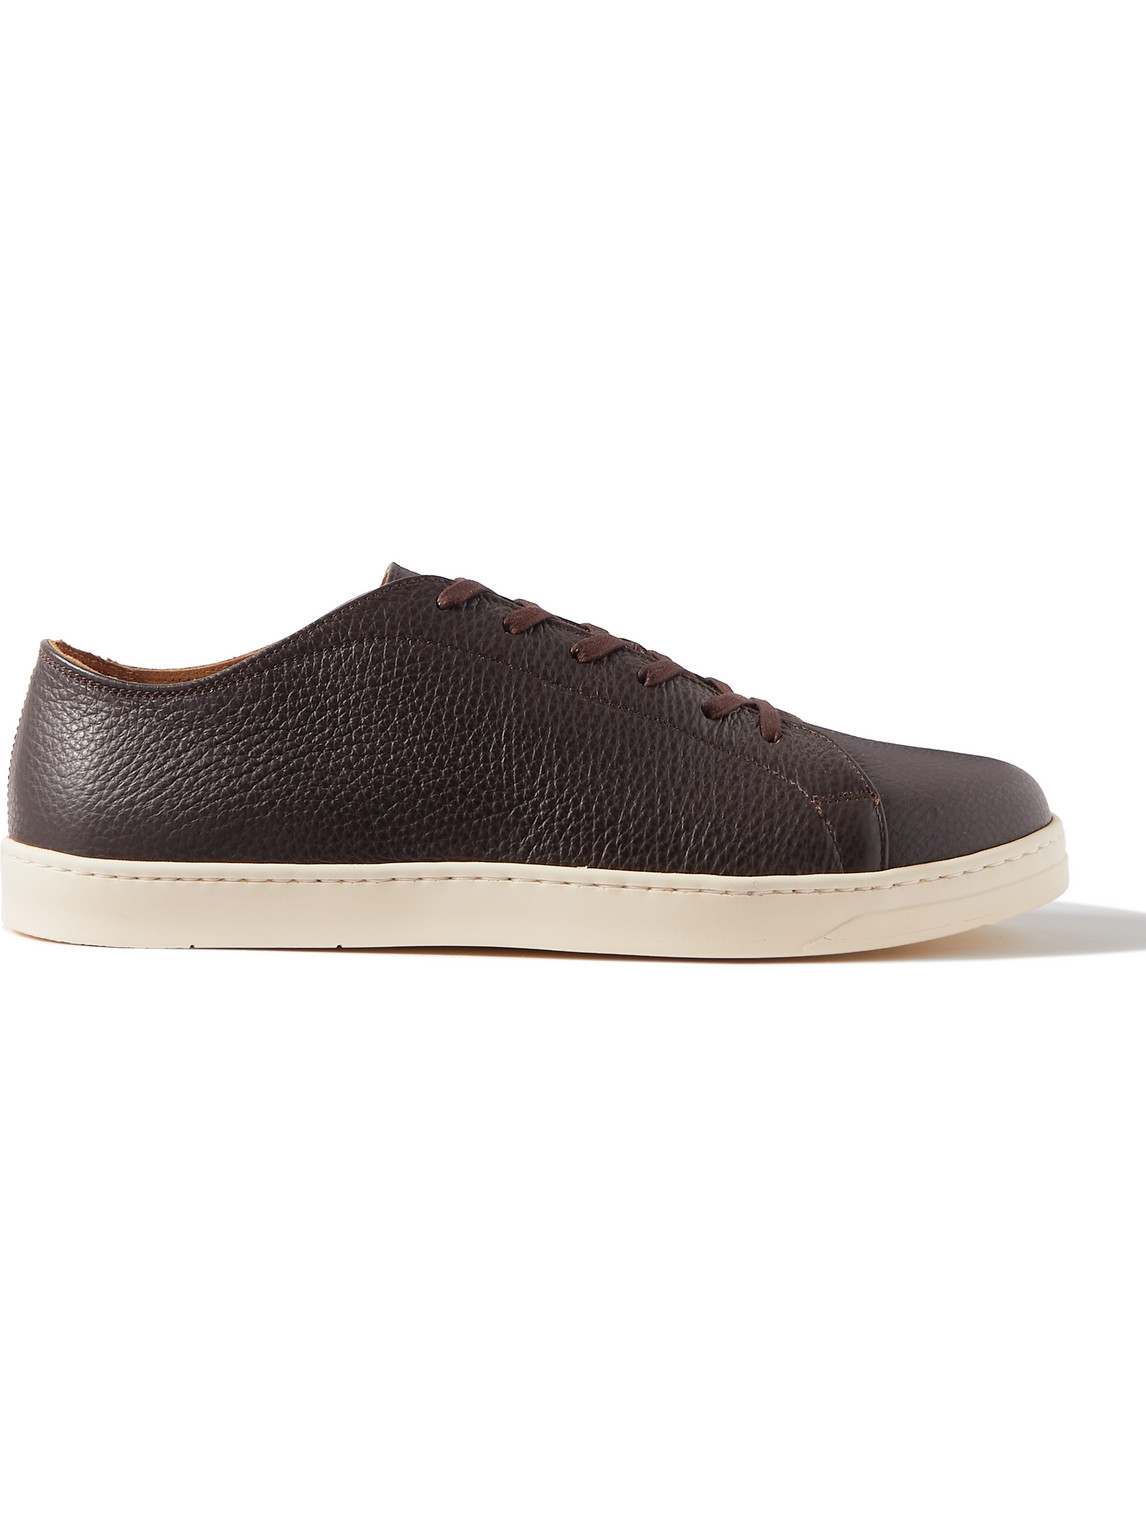 George Cleverley Full-grain Leather Sneakers In Brown